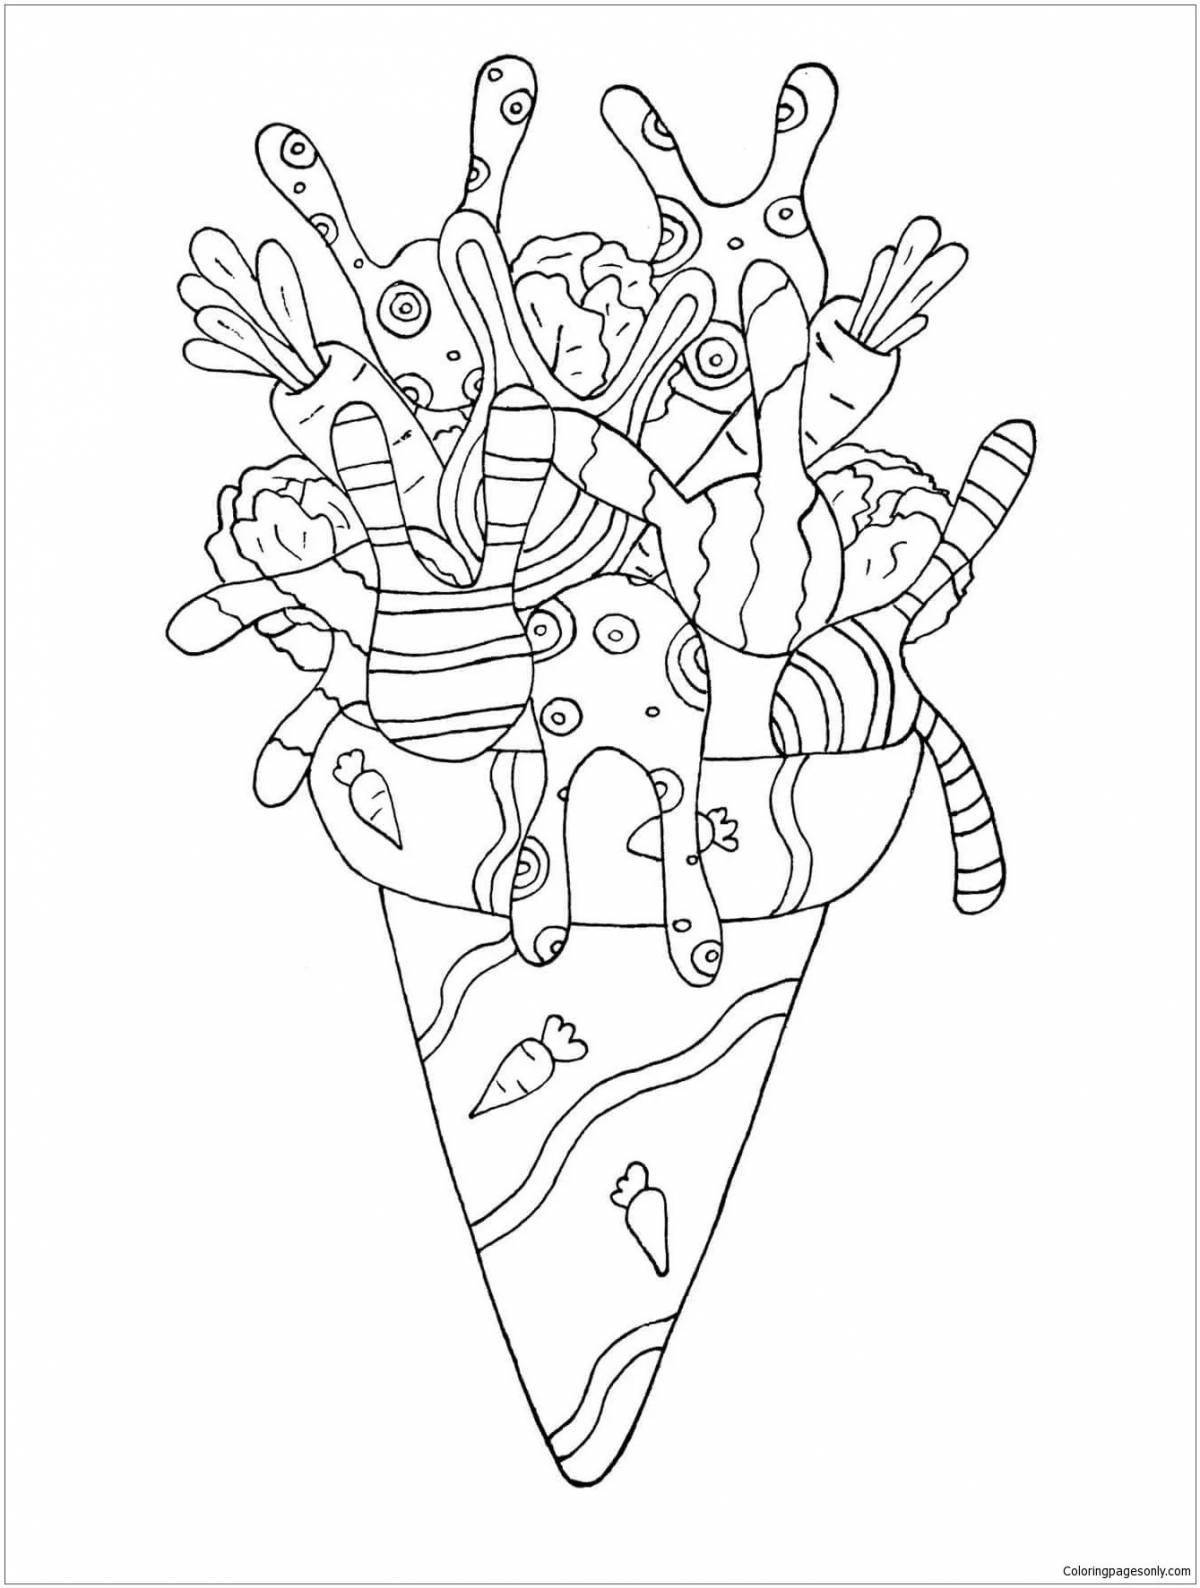 Coloring joyfilled antistress ice cream